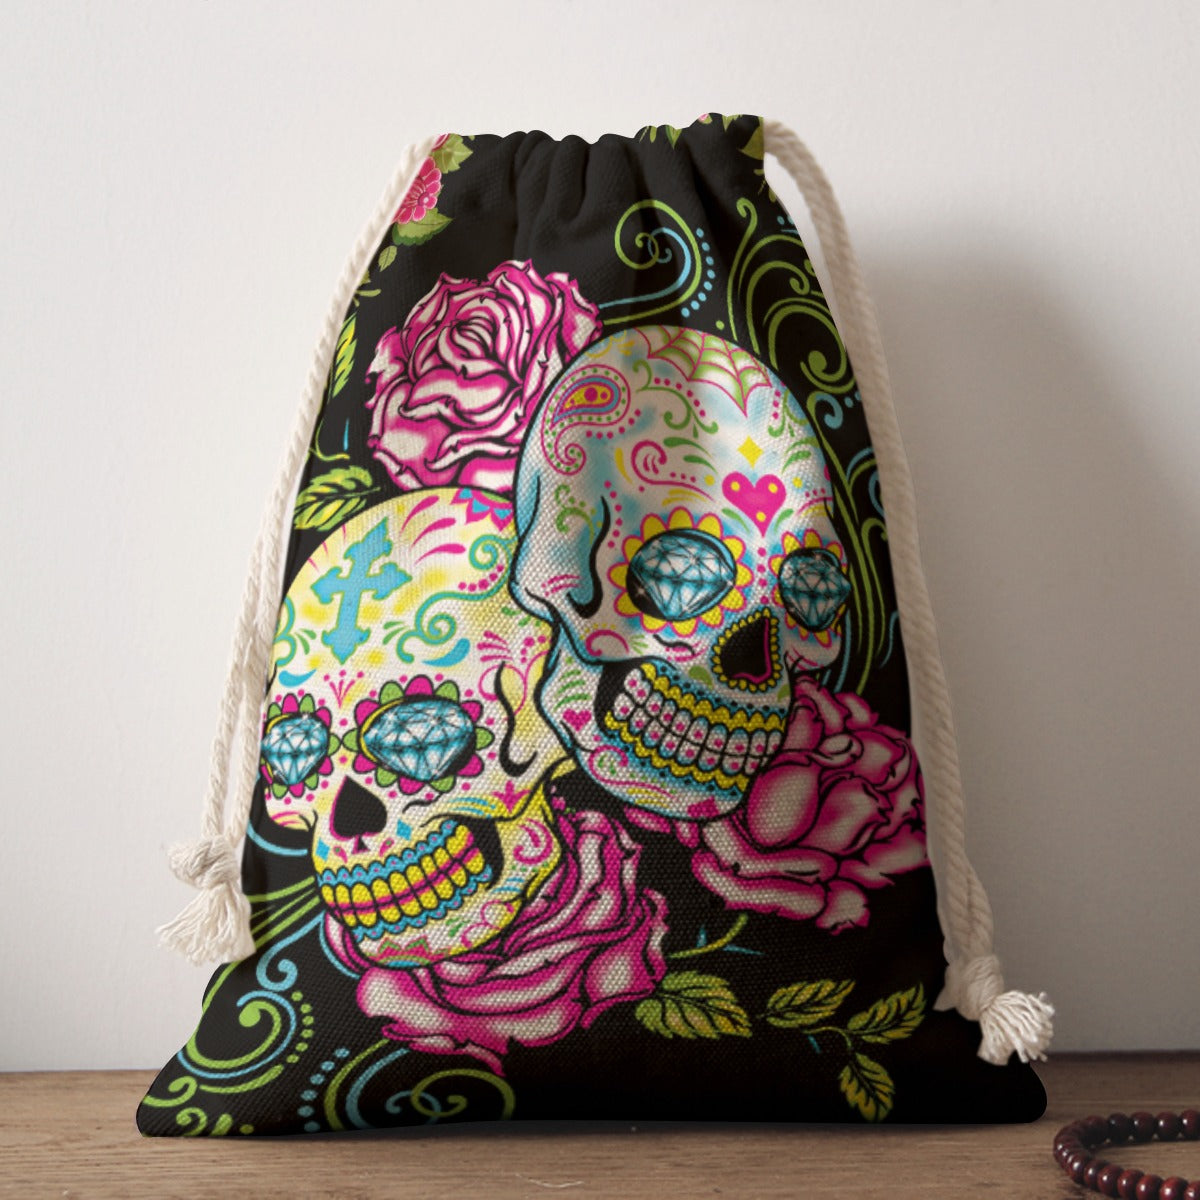 Dia de los muertos skeleton Drawstring Bag, Mexican sugar skull bag handbag shoulder bag backpack